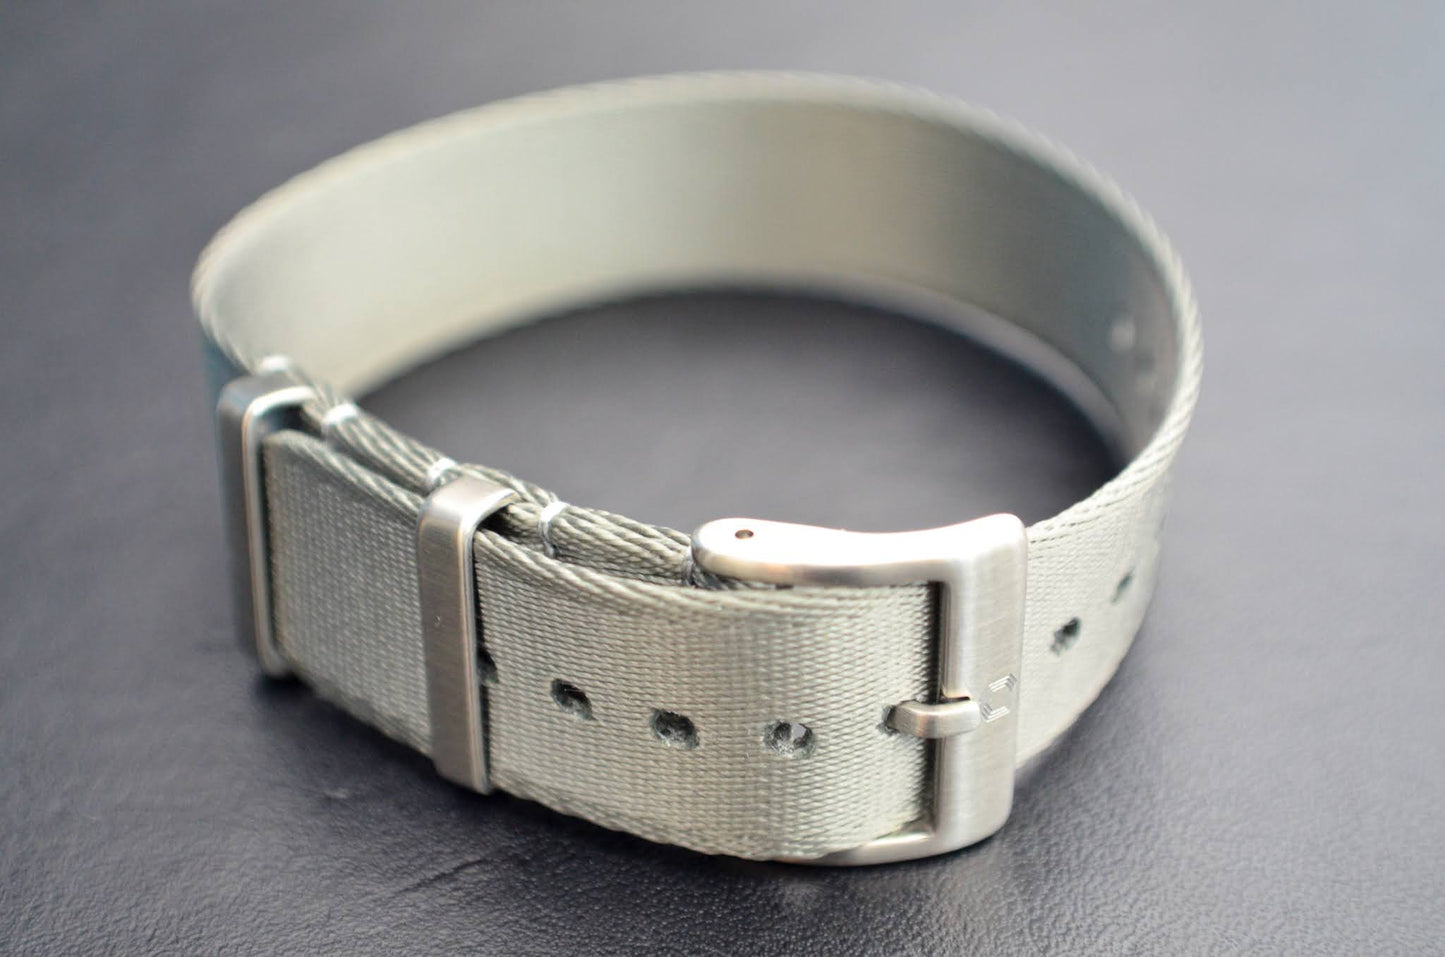 The ' Lancaster' - Single pass grey watch strap made of a soft seatbelt nylon